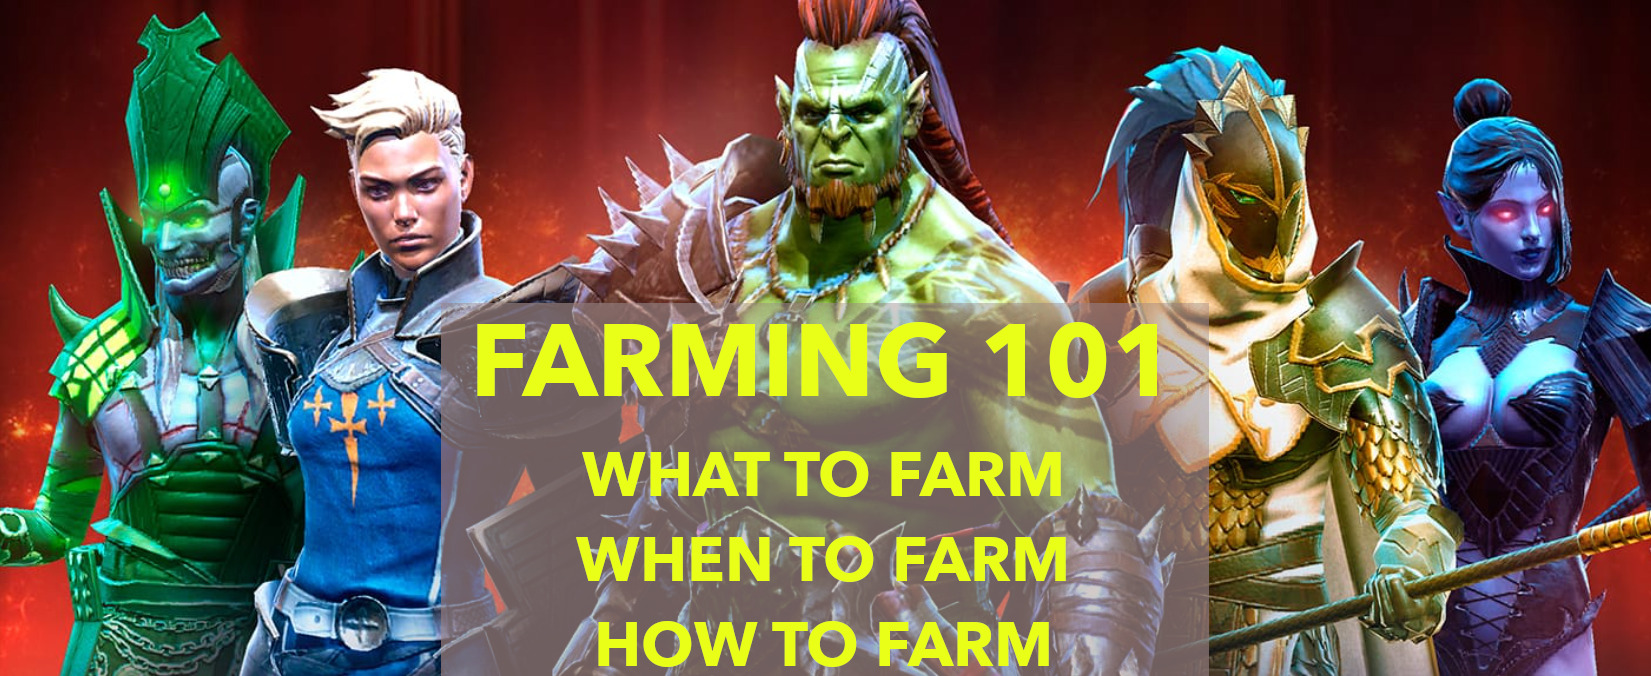 Farming 101 - What to farm, when to farm, how to farm